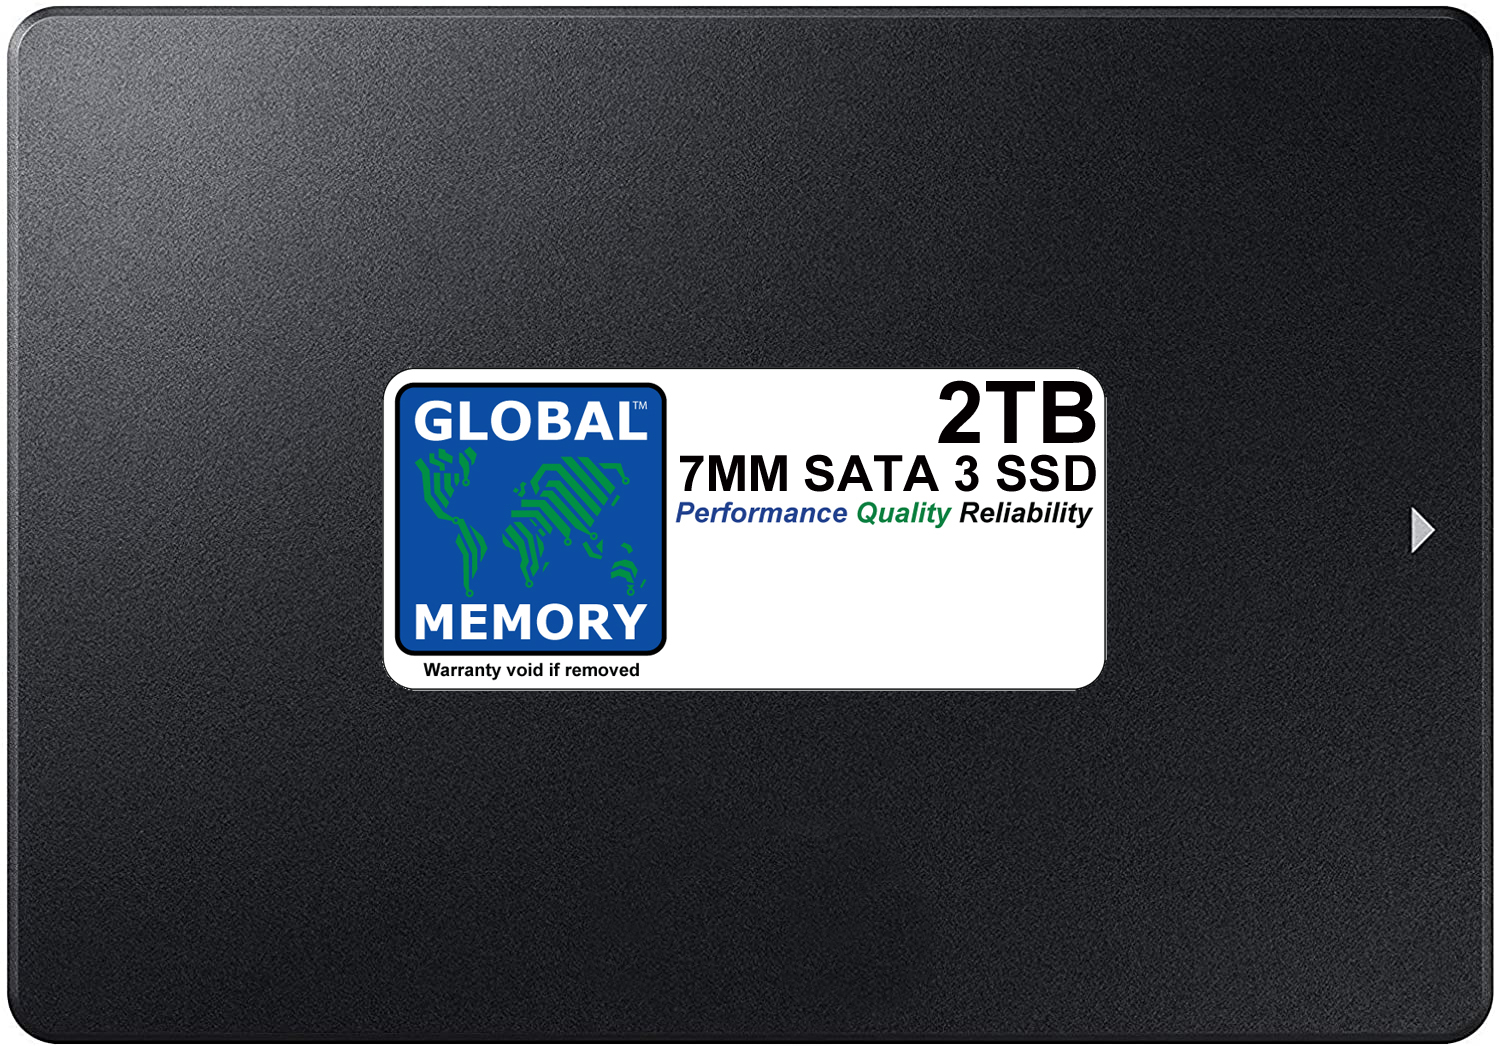 2TB 7mm 2.5" SATA 3 SSD FOR LAPTOPS / DESKTOP PCs / SERVERS / WORKSTATIONS